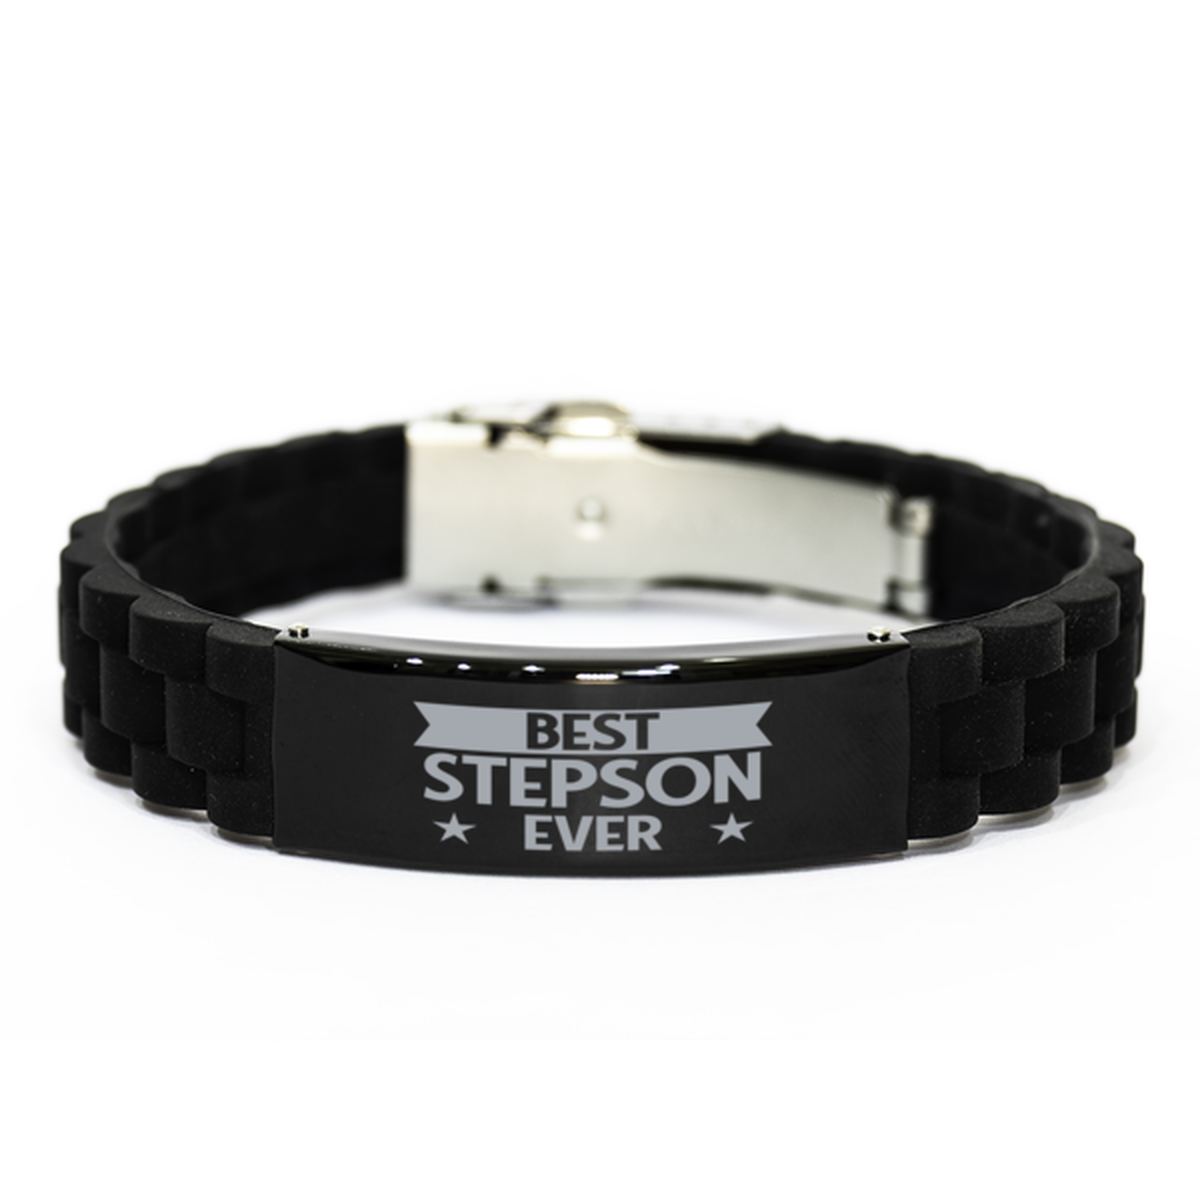 Best Stepson Ever Stepson Gifts, Funny Black Engraved Bracelet For Stepson, Family Gifts For Men